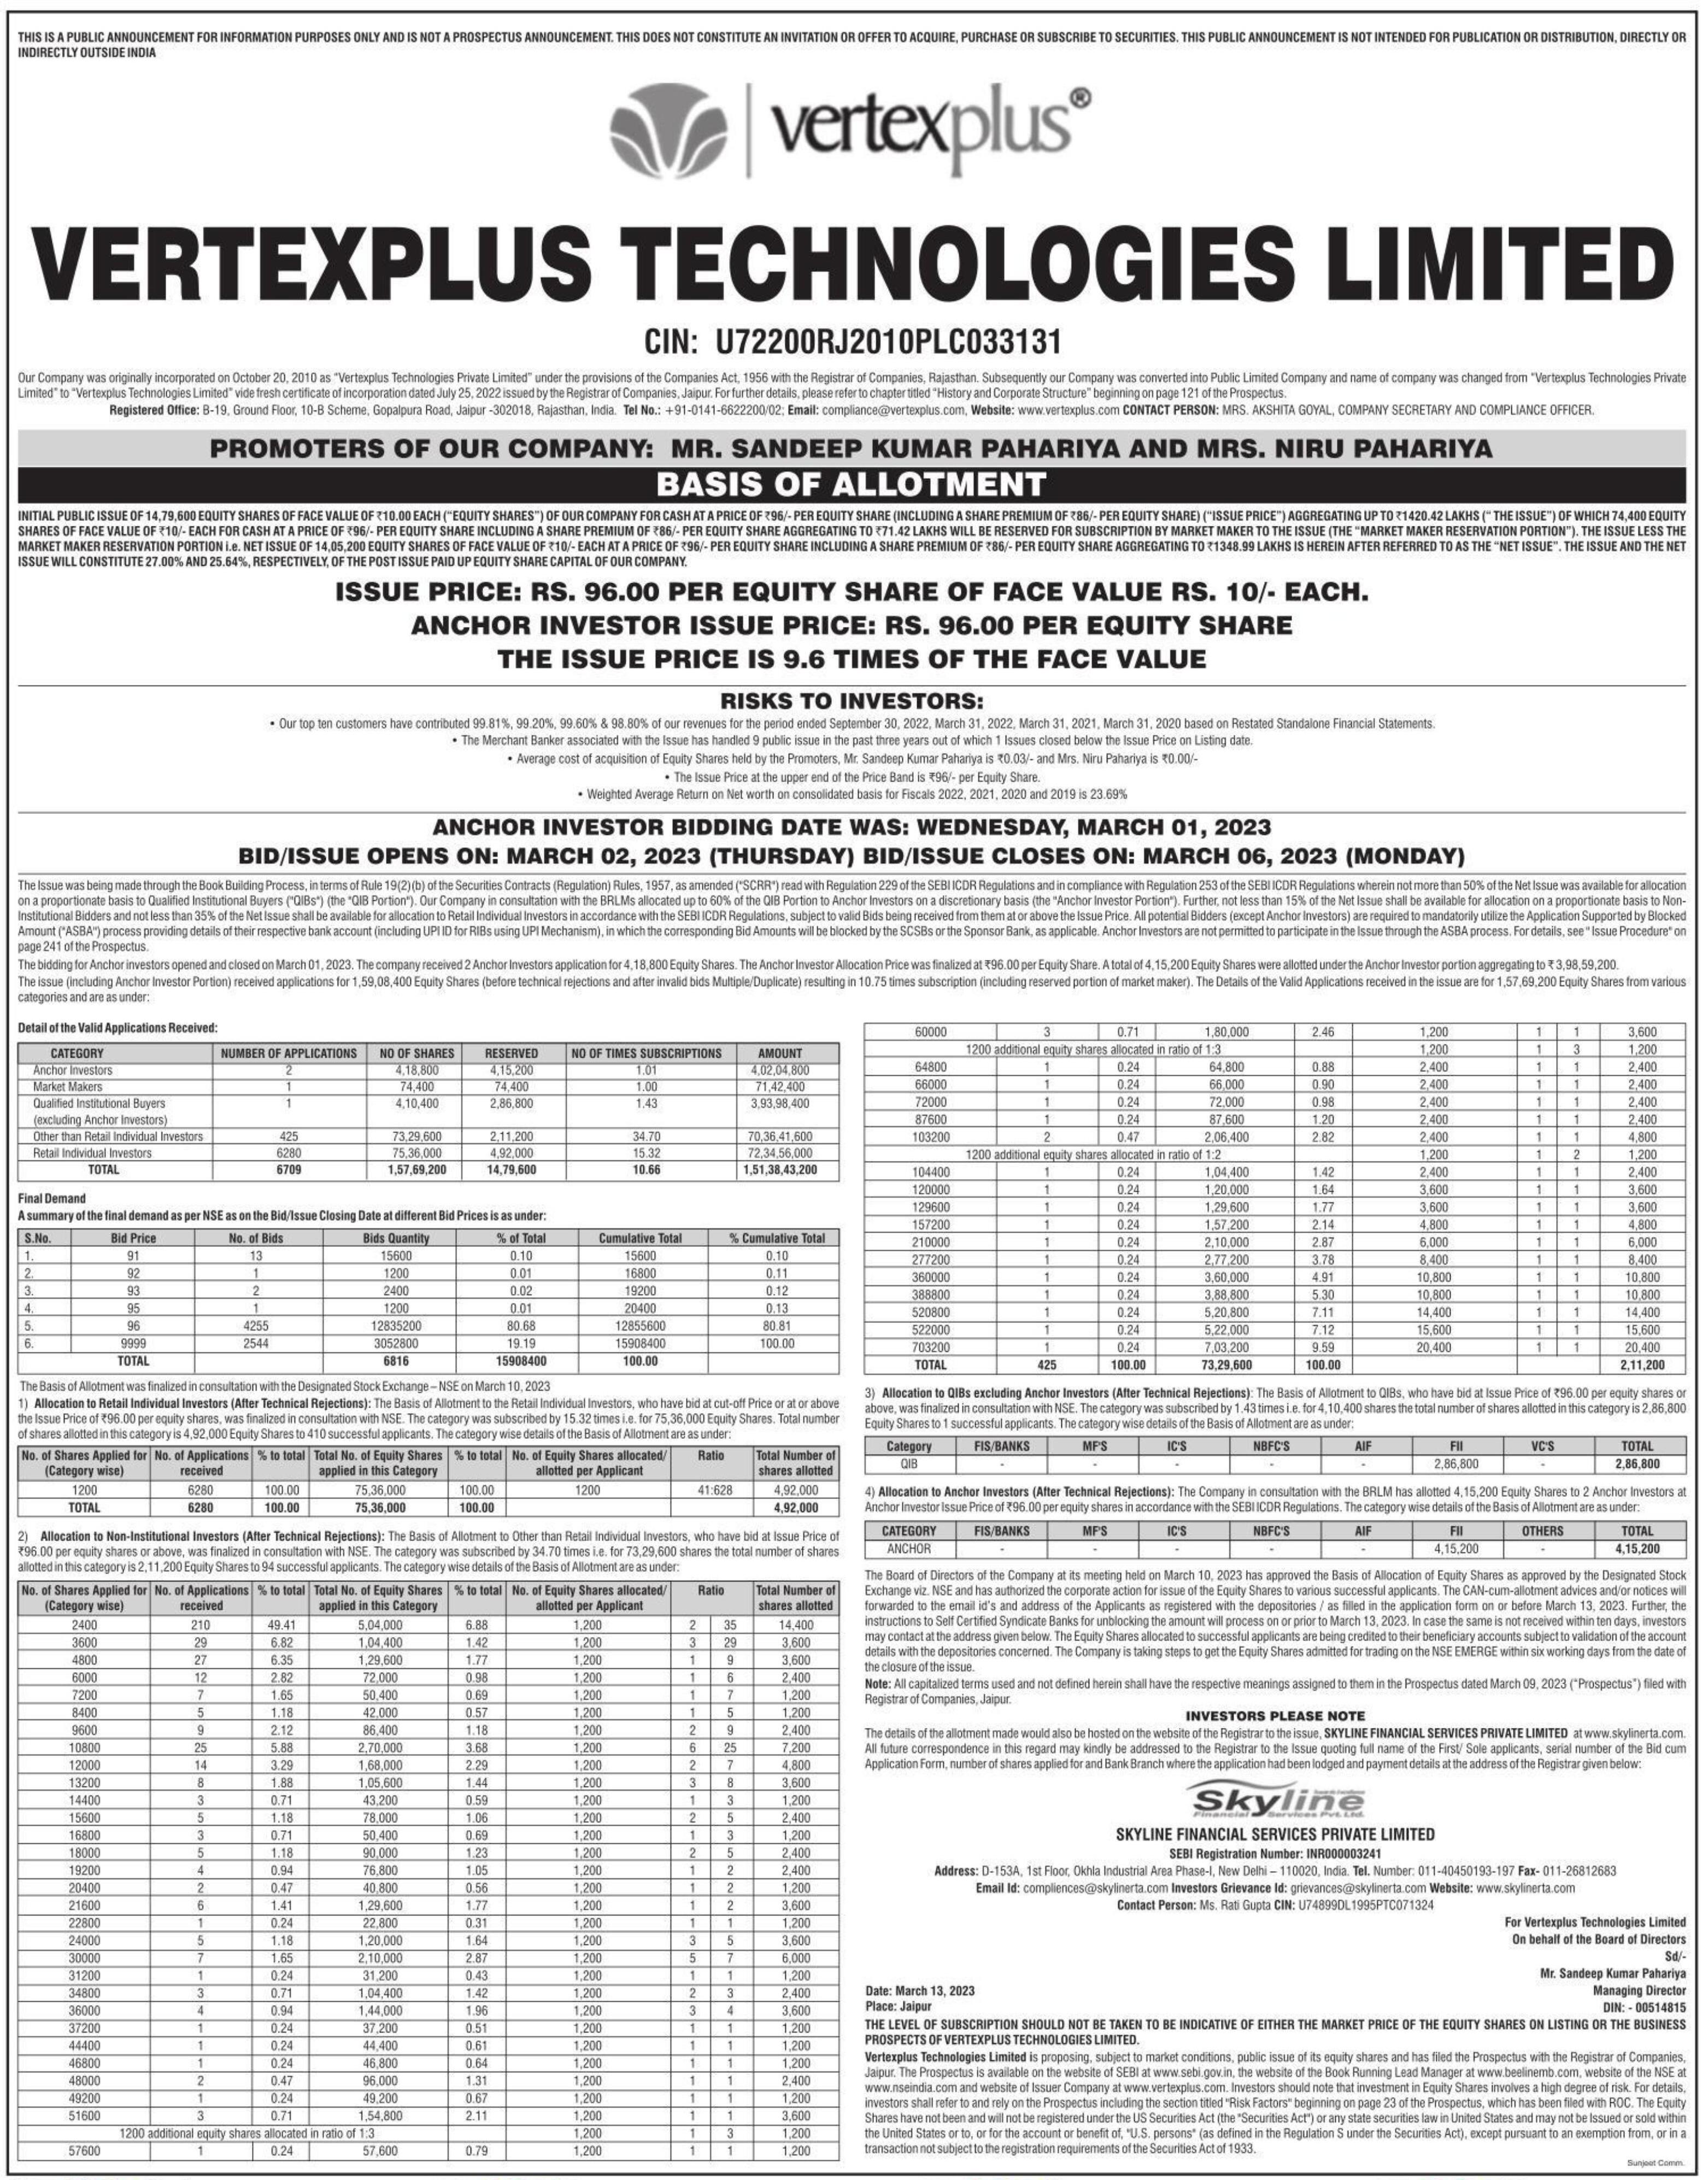 Vertexplus Technologies Limited IPO Basis of Allotment